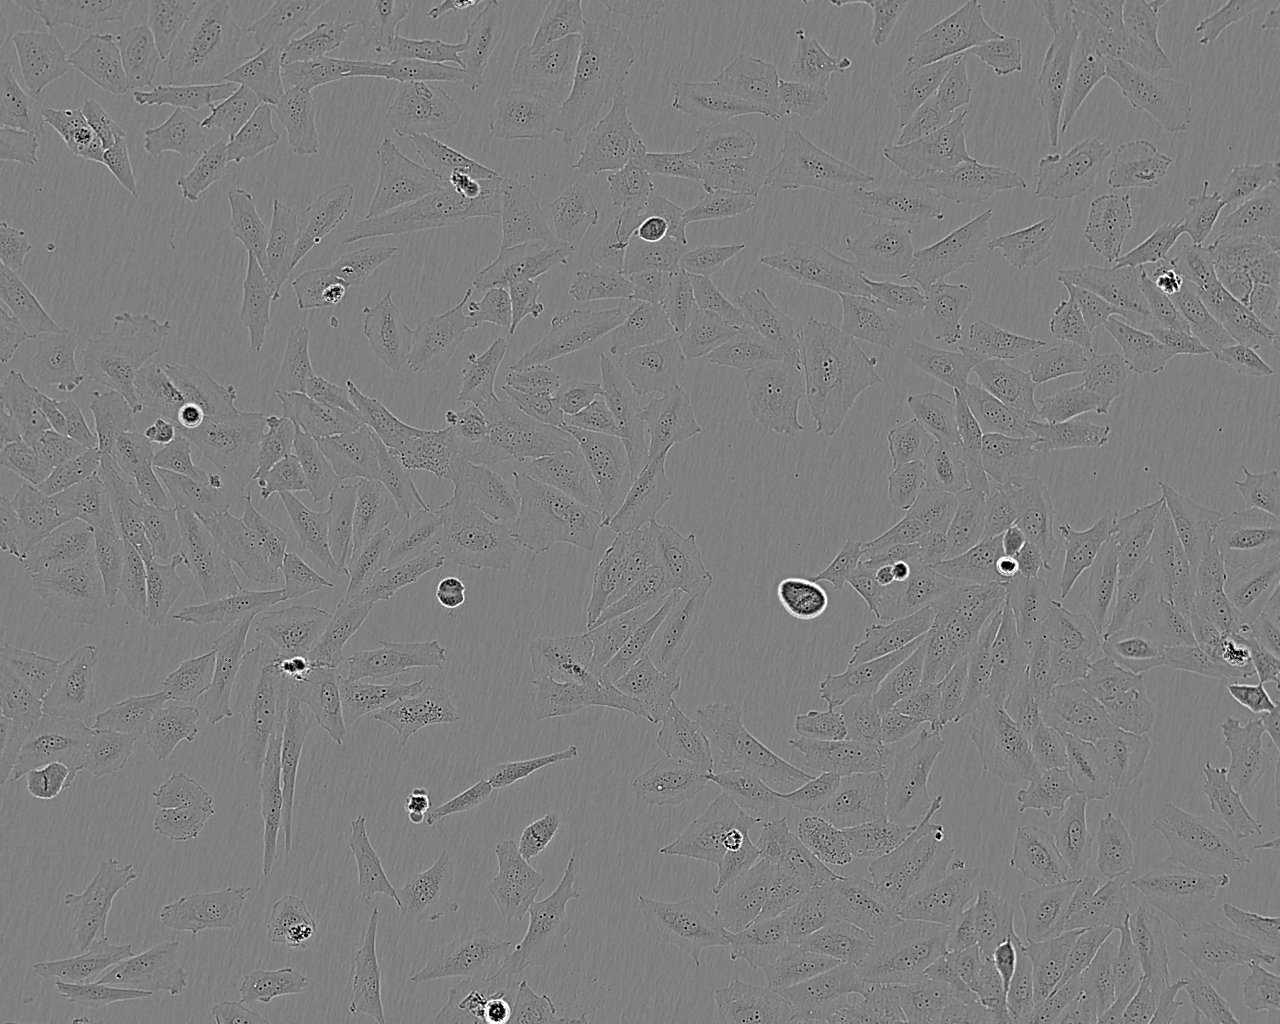 NCI-H295R epithelioid cells人肾上腺皮质腺癌细胞系